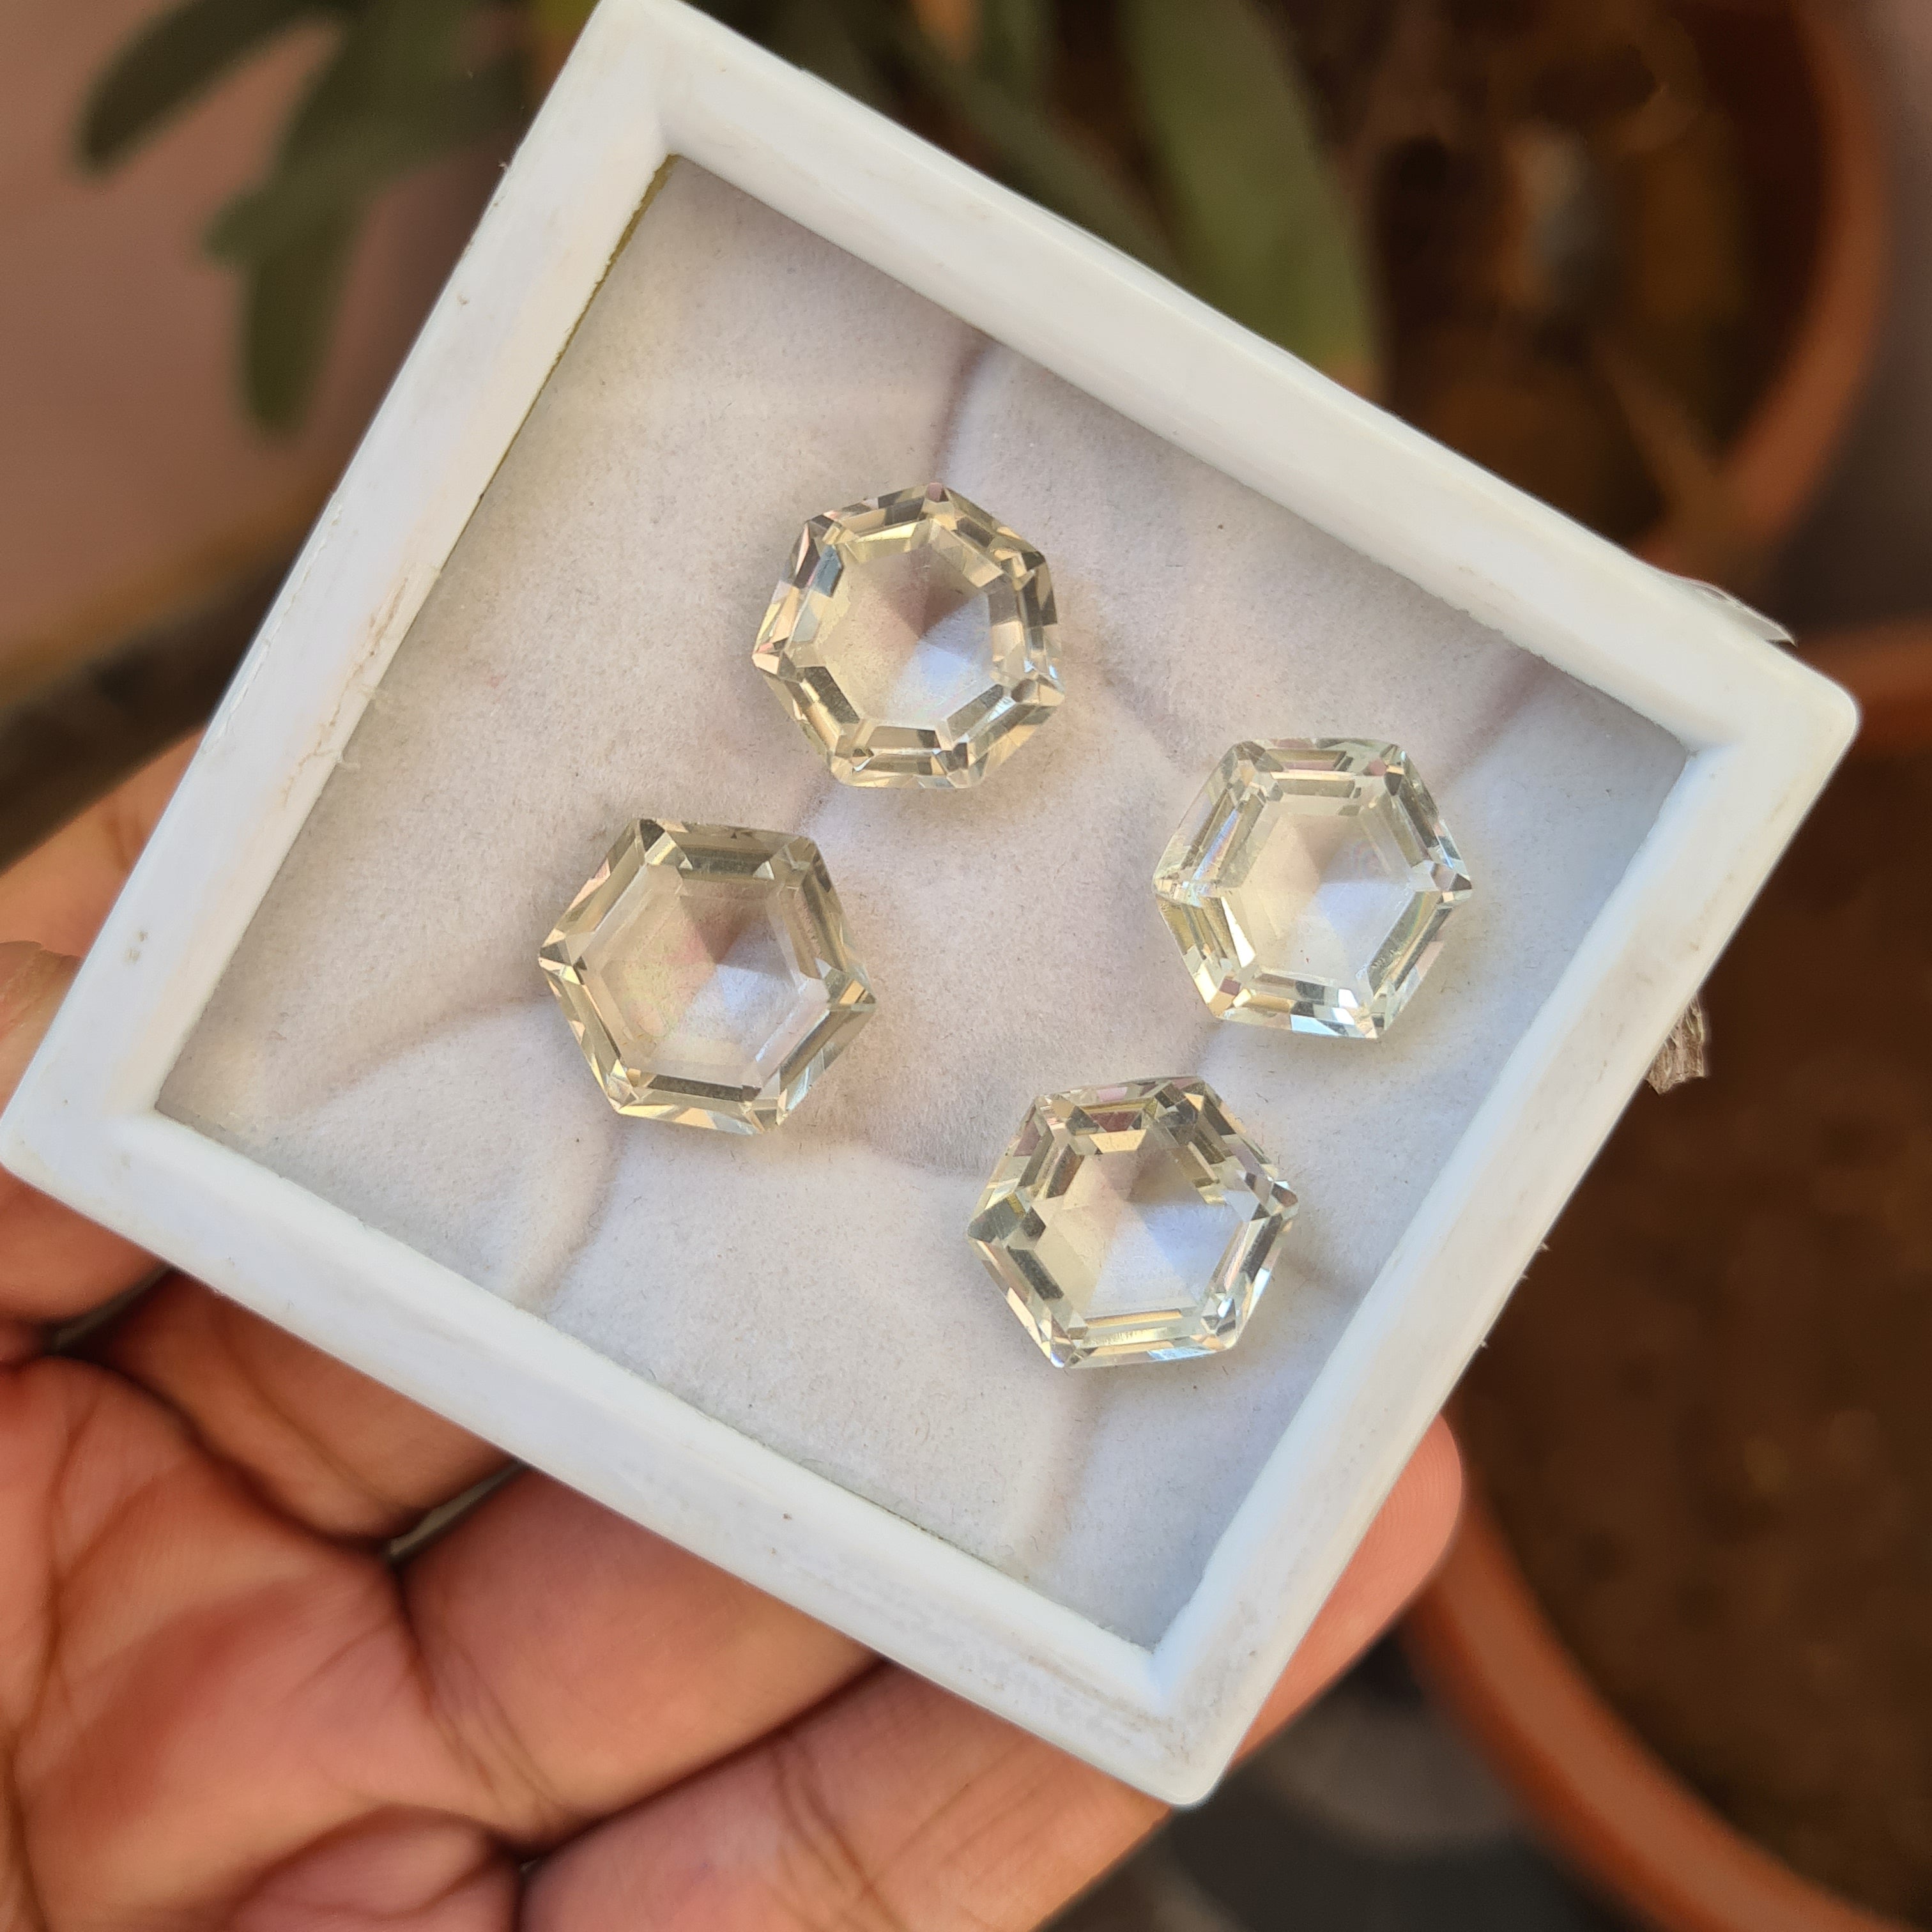 BOGO Offer: 4 Pcs Topaz hexagon Gemstones Set | Sizes: 13-15mm - The LabradoriteKing